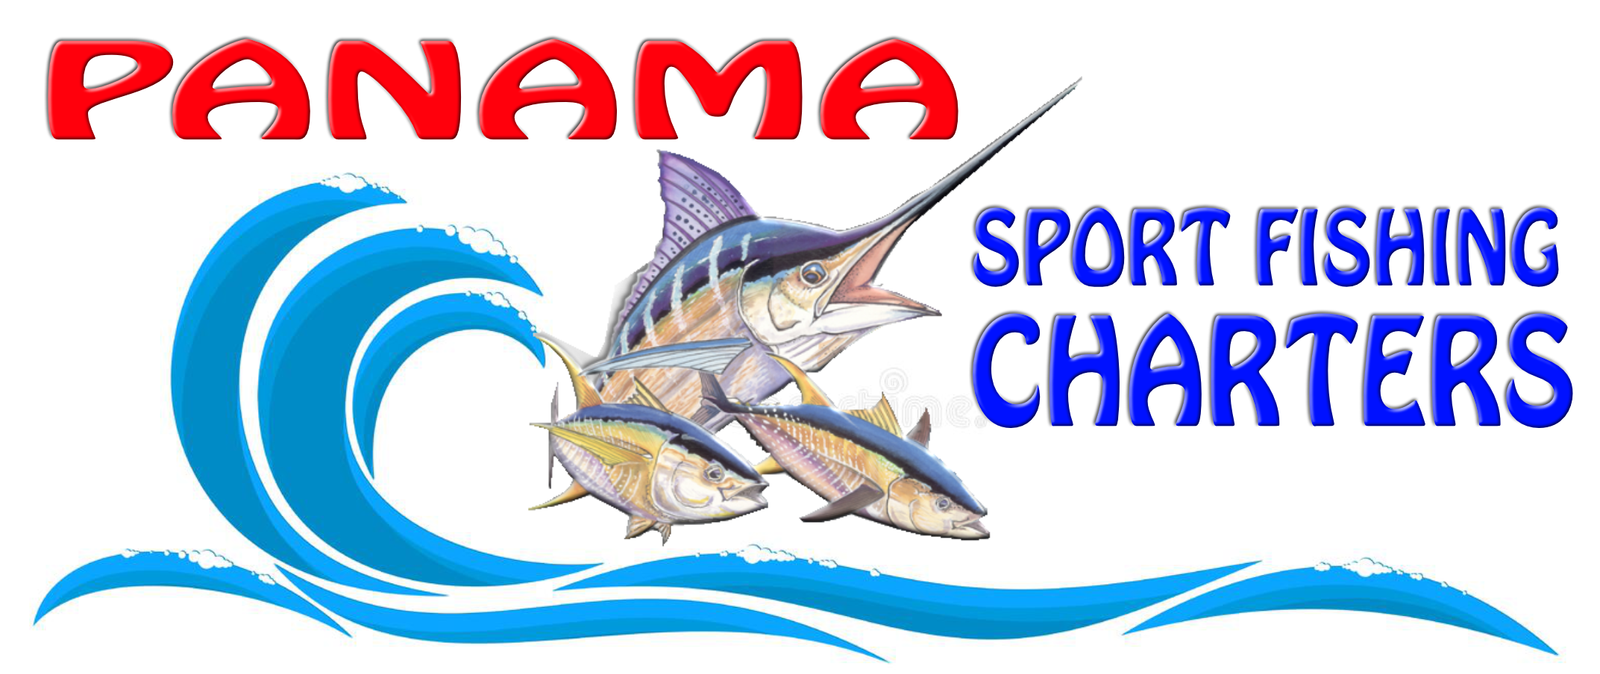 Panama Sport Fishing Charters